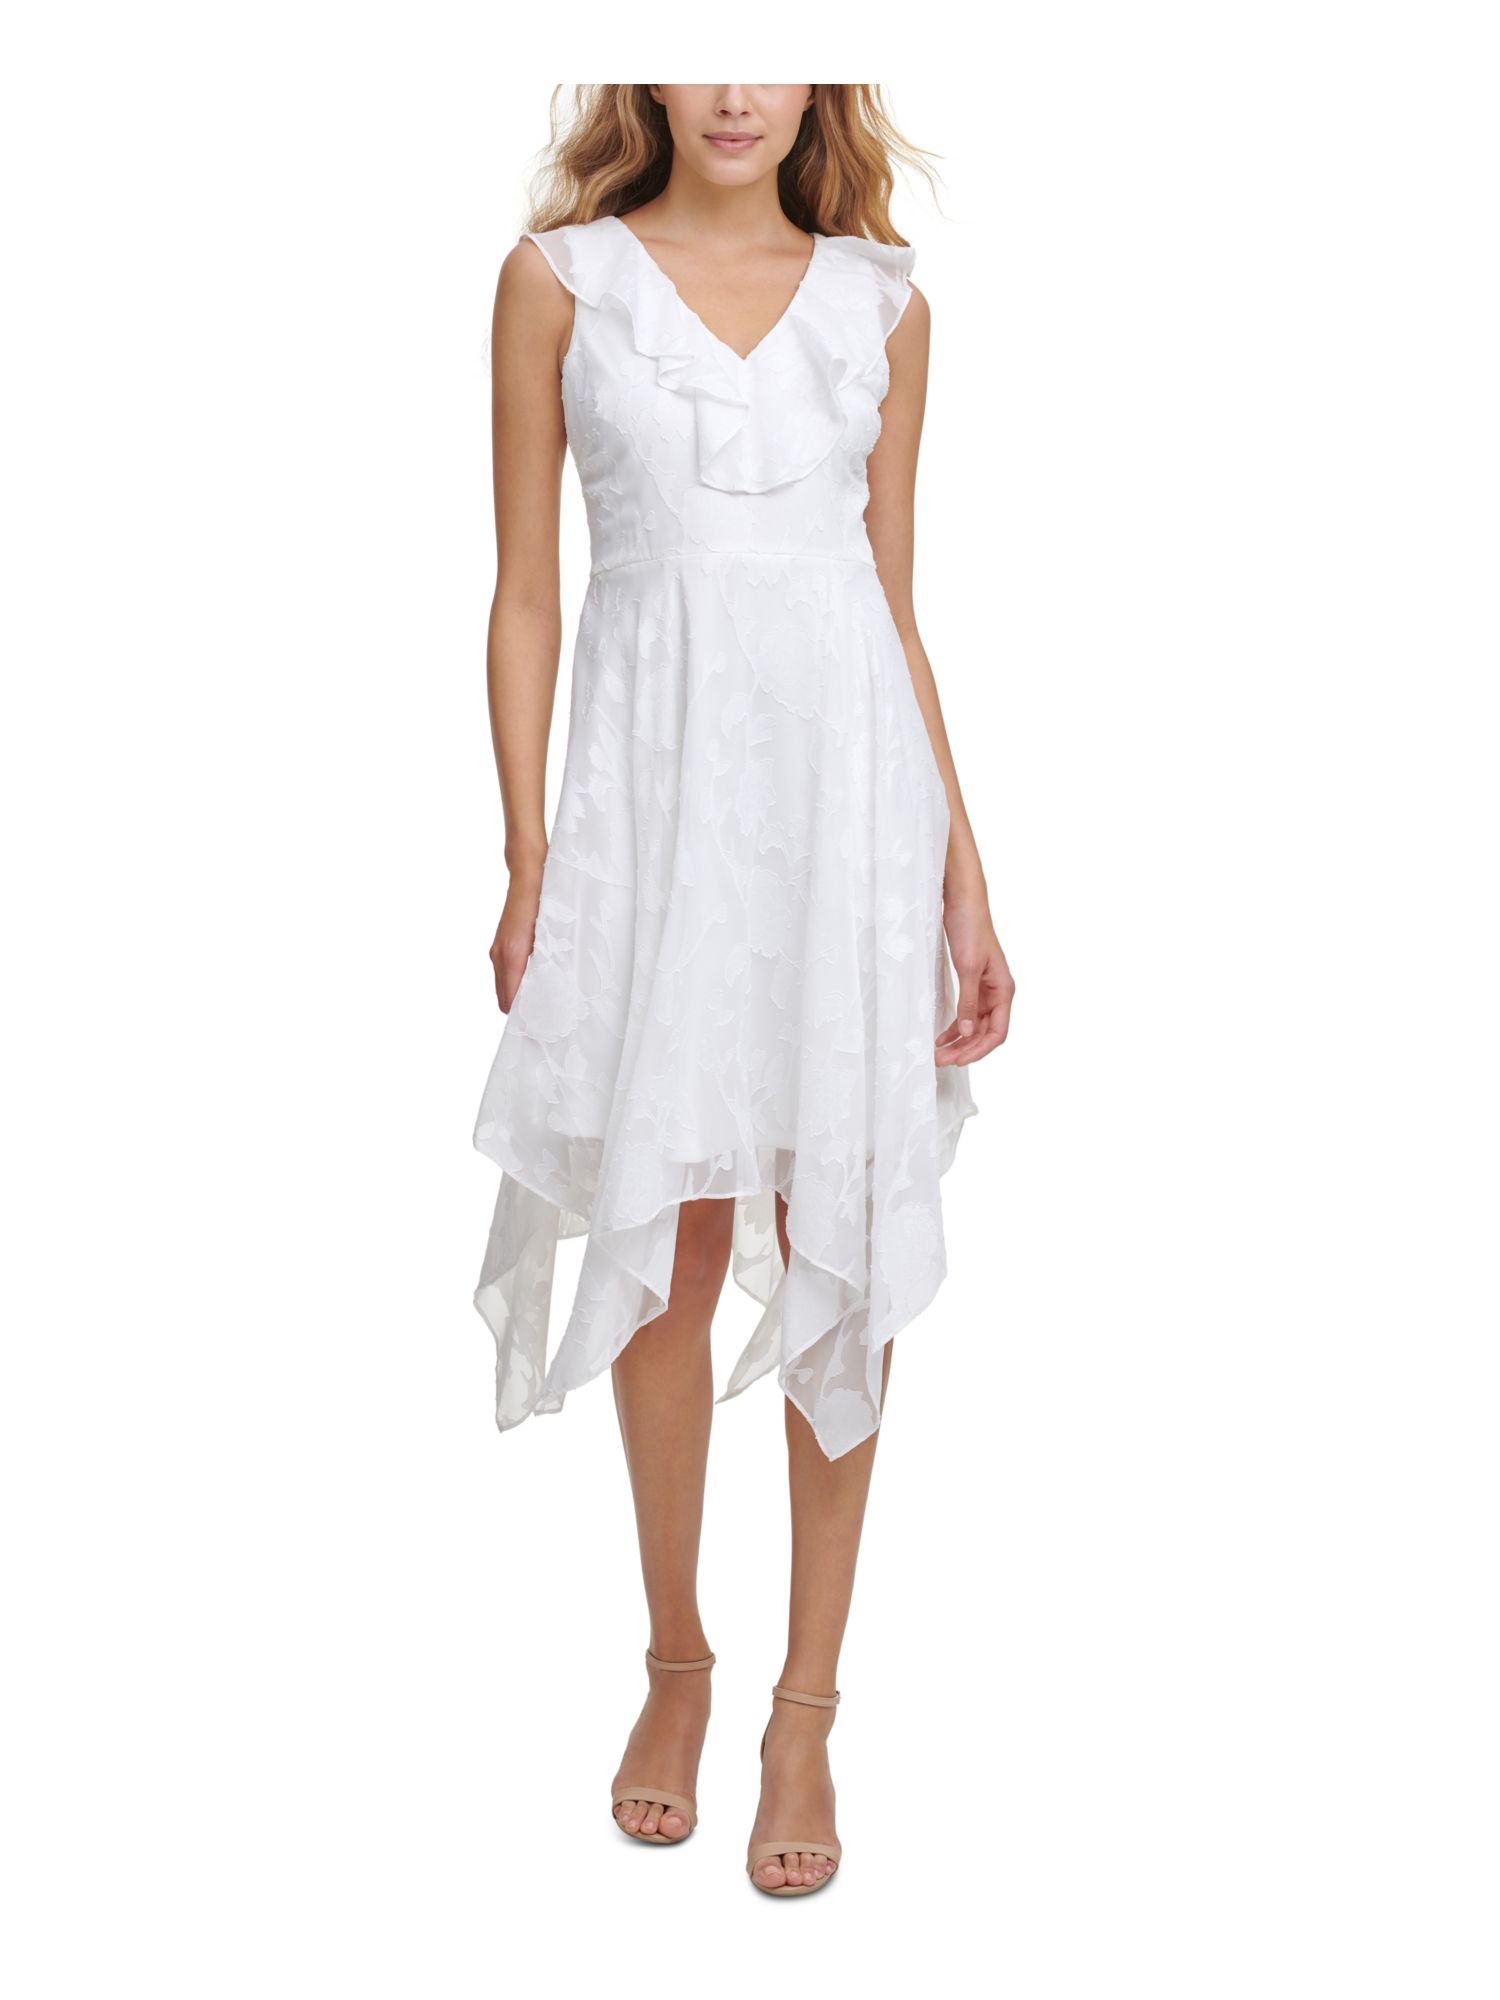 KENSIE DRESSES Womens White Ruffled Zippered Handkerchief Hem Floral Sleeveless V Neck Midi Evening Fit + Flare Dress 10